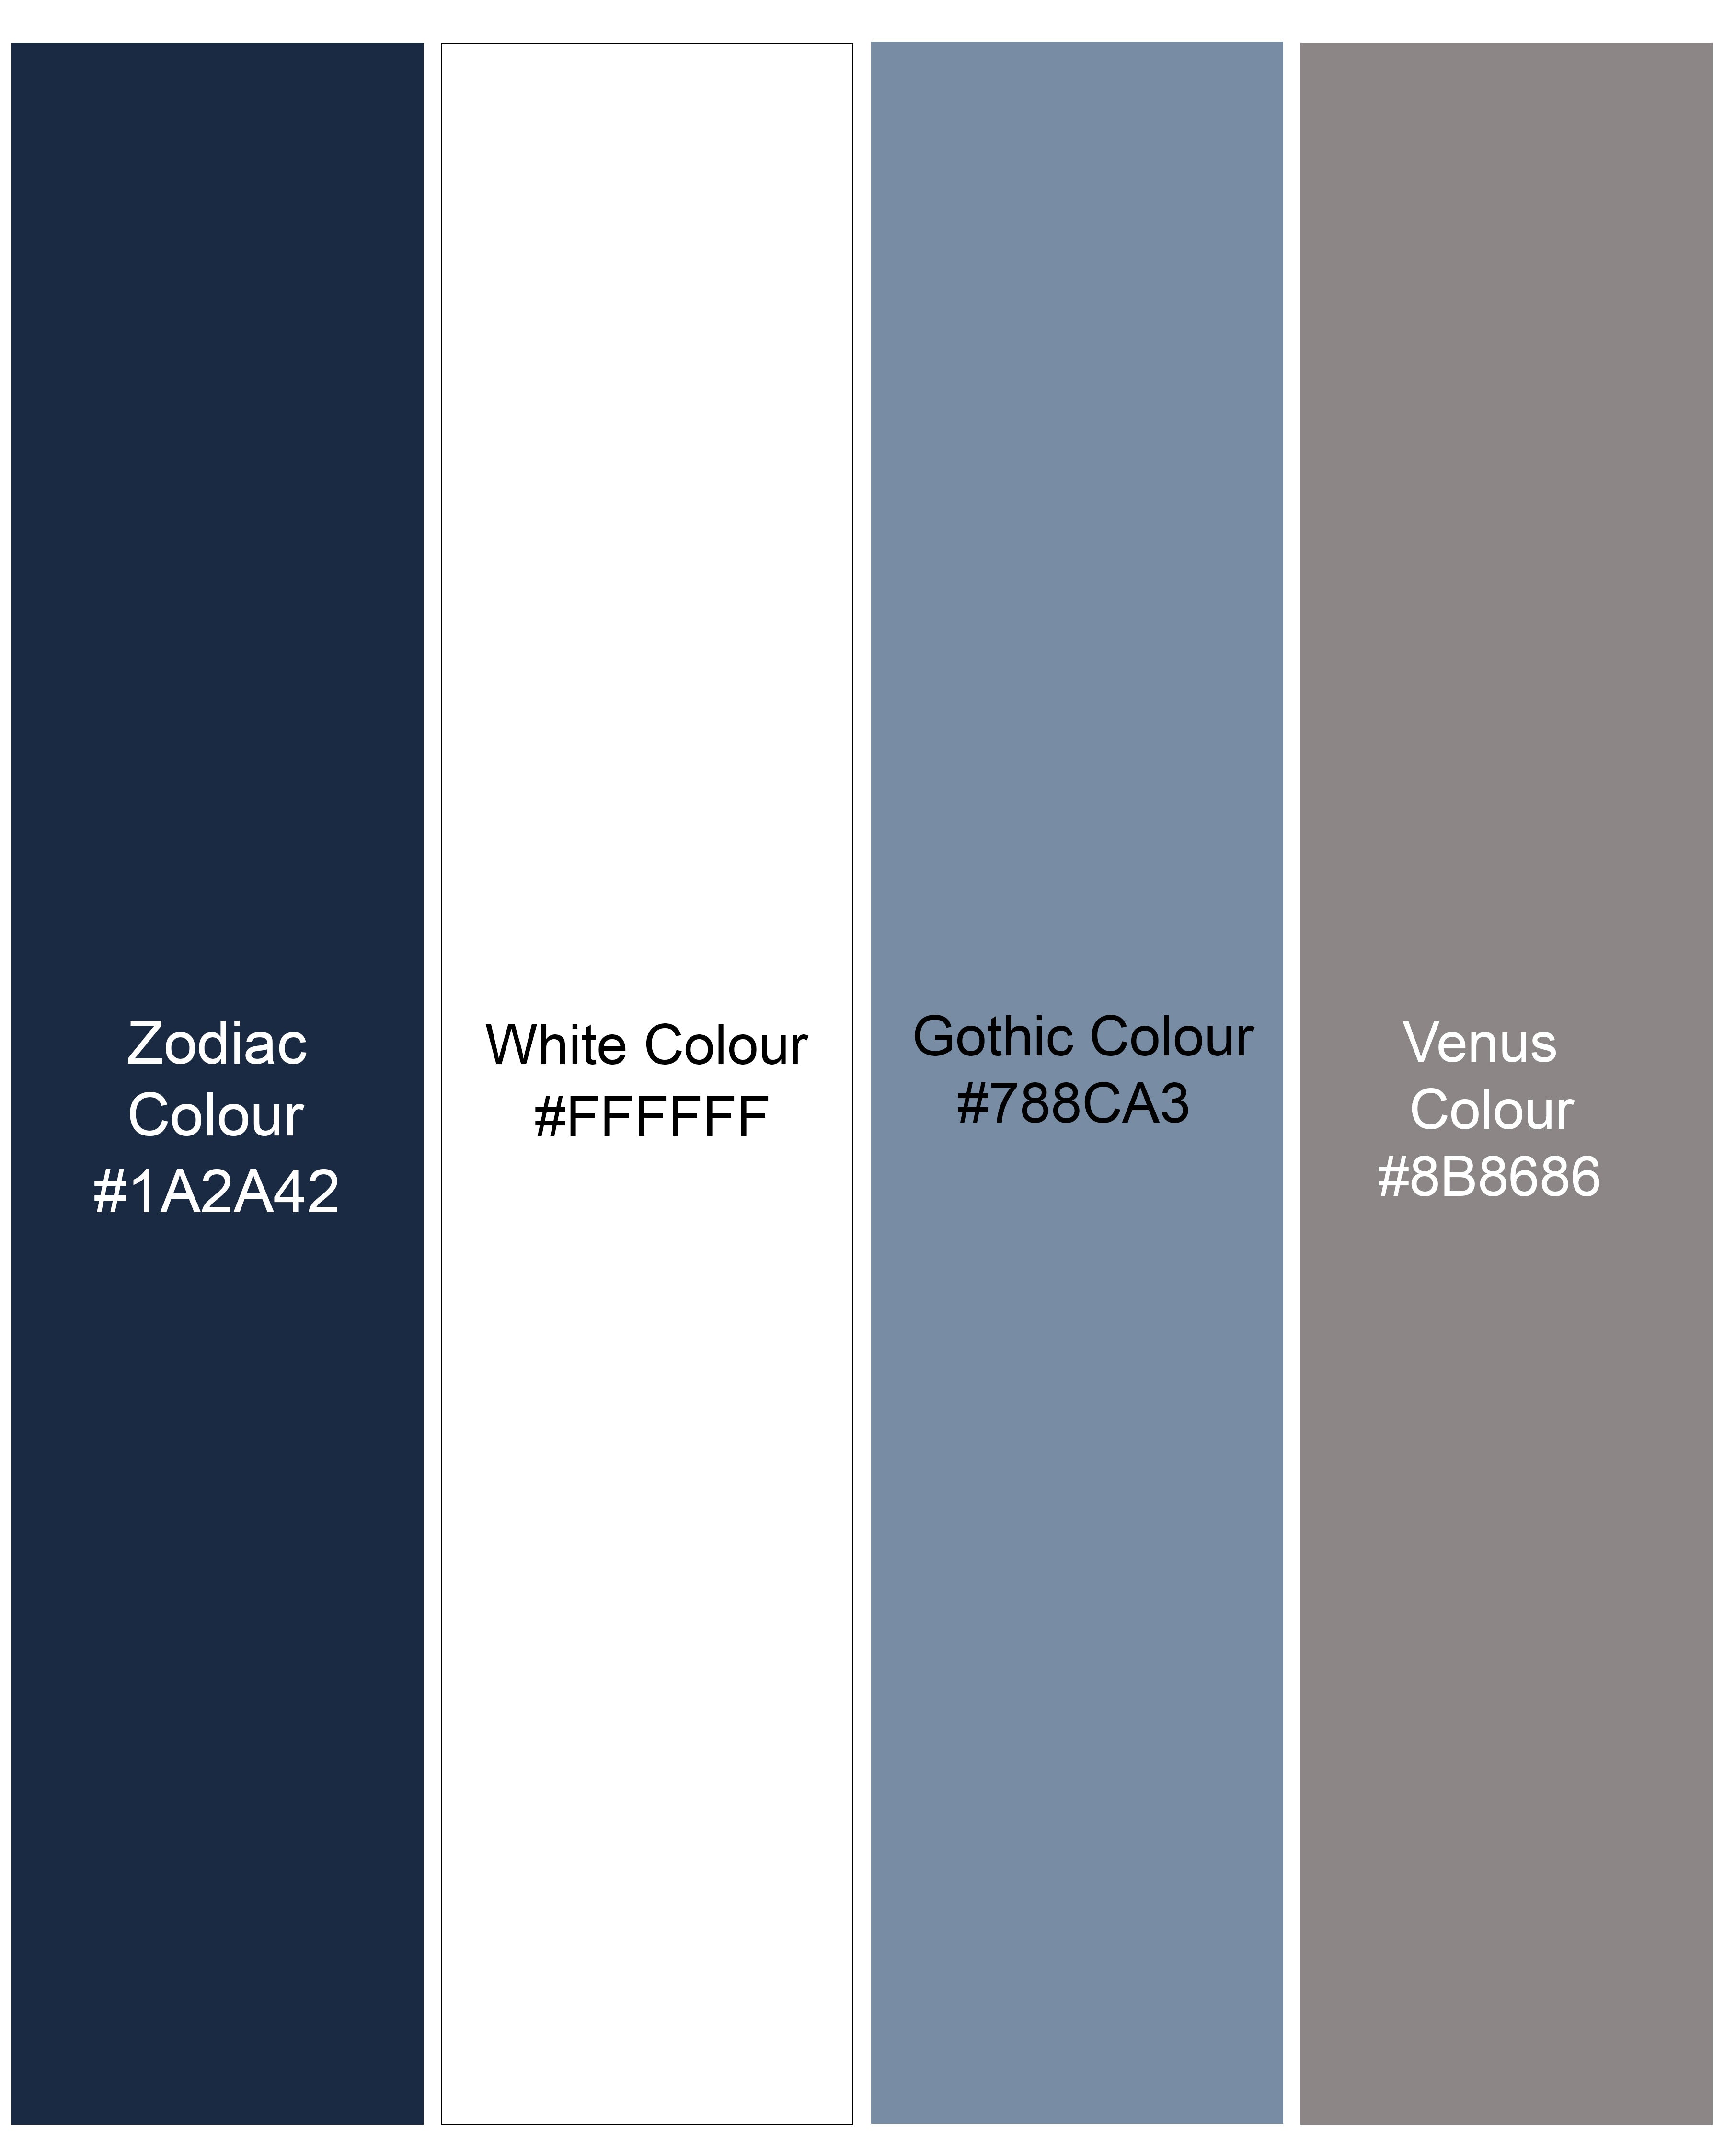 Zodiac Blue with White Chambray Bohemian Textured Shirt